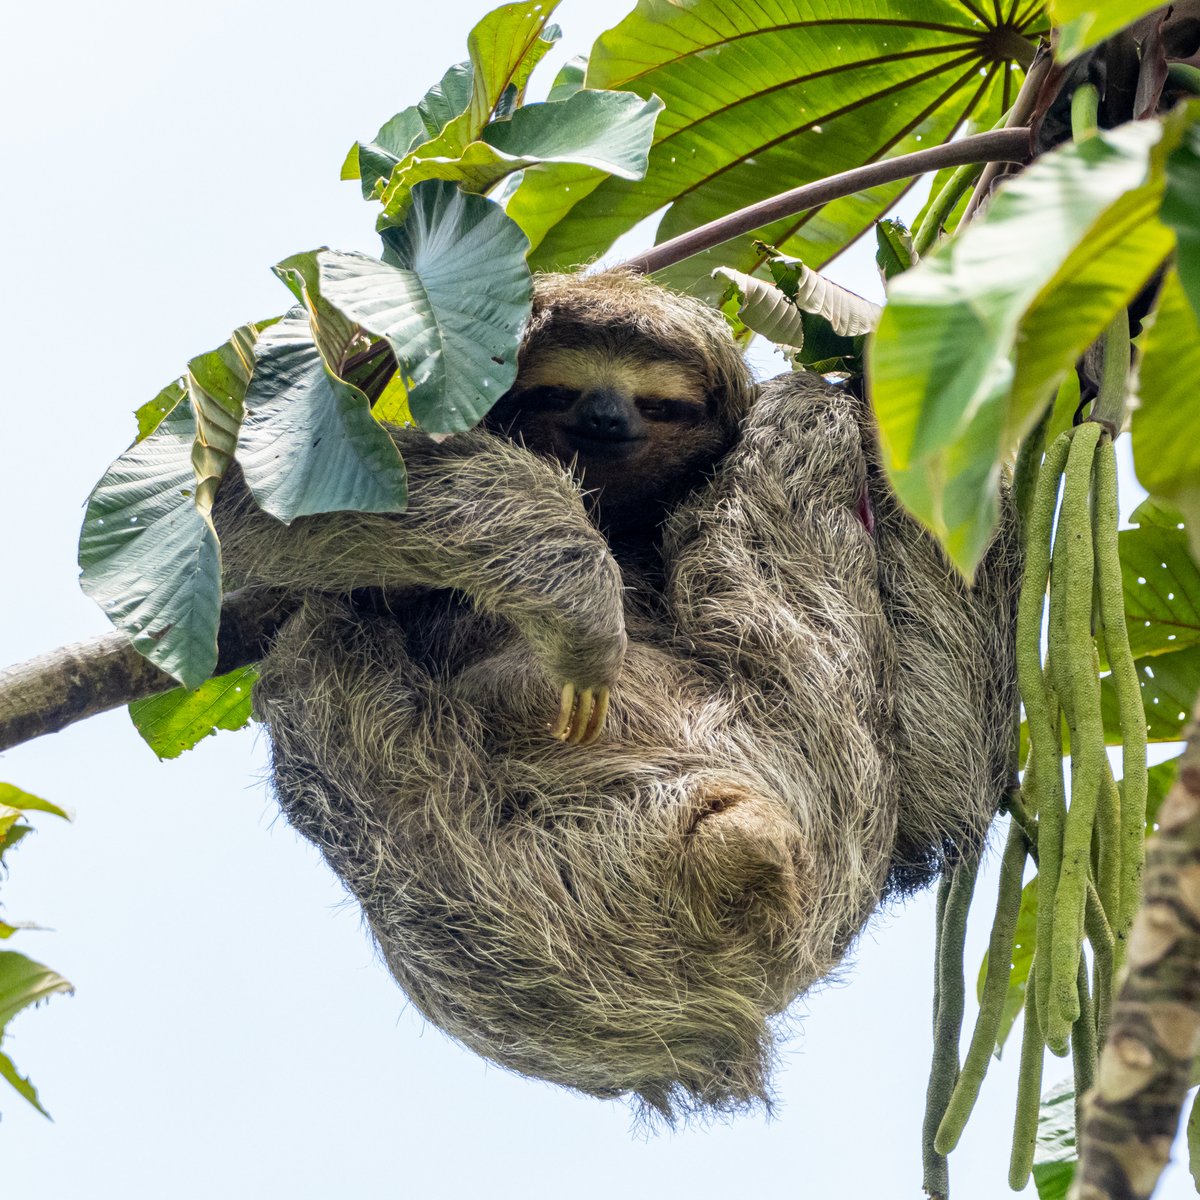 Couple of places left on my Panama Tour with
@birdnaturetours 

12 - 22 September  2024  Fabulous forest canopy birding & wildlife watching!  

More info: theurbanbirderworld.com/tour/panama-20……

@OlympusUK @LeicaBirding @TravWriters